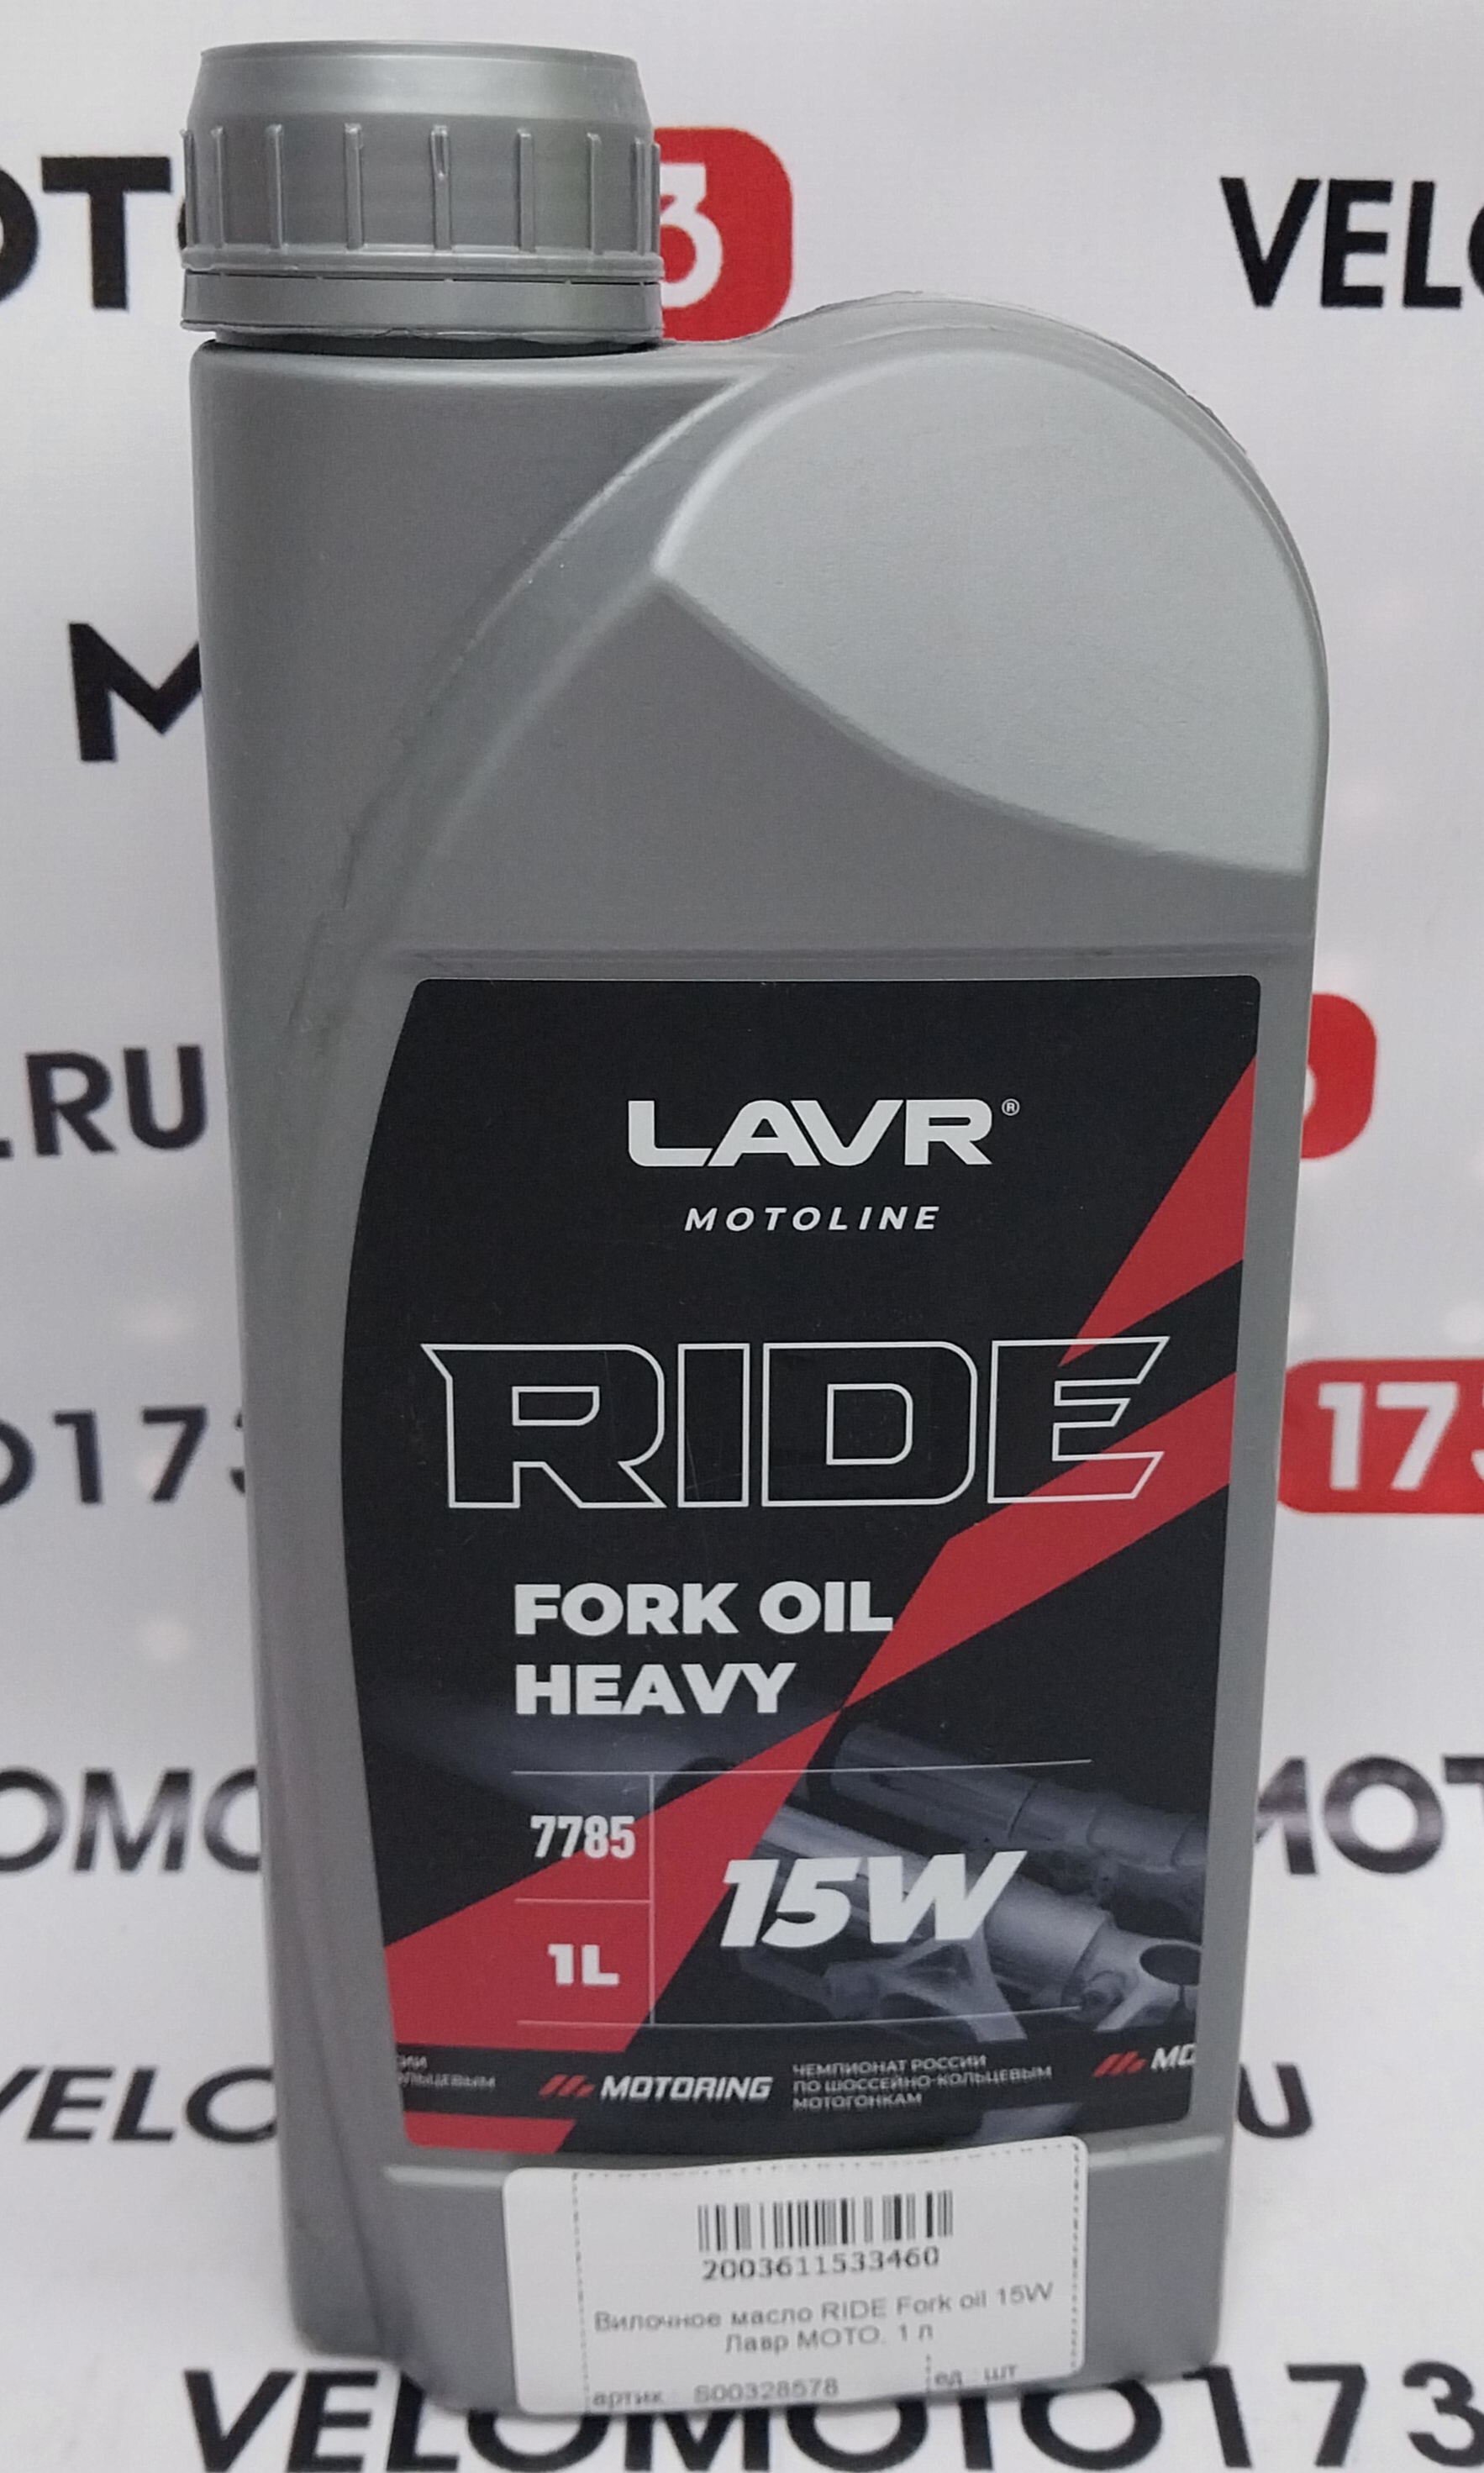 Вилочное масло RIDE Fork oil 15W Лавр МОТО, 1 л